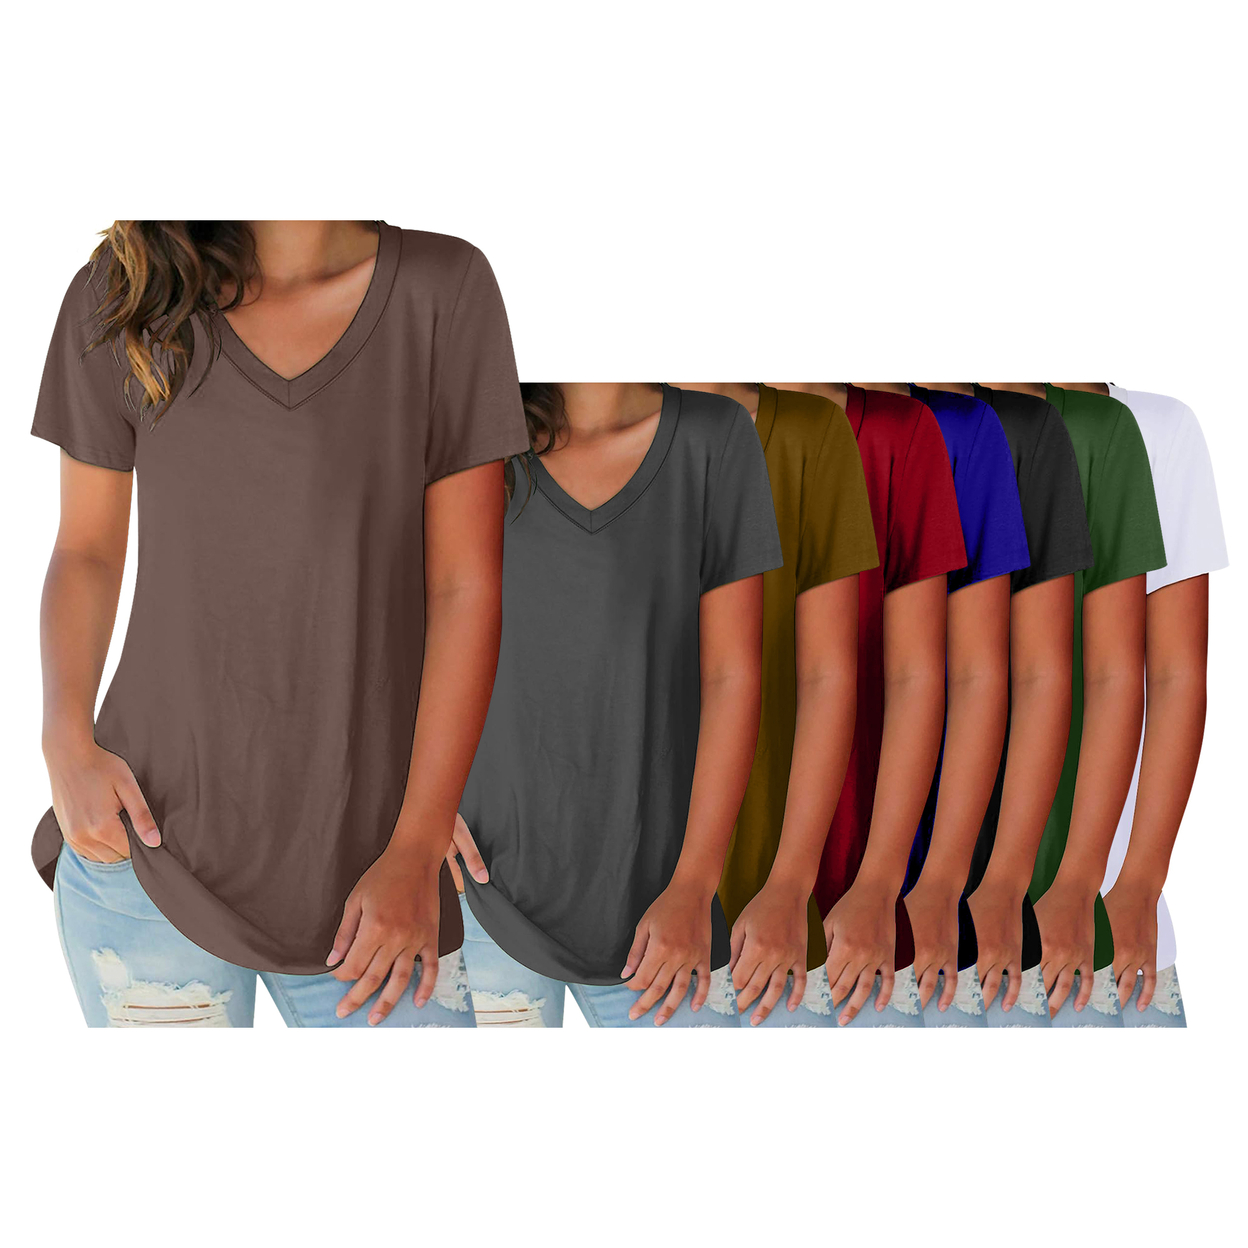 5-Pack: Women's Ultra Soft Smooth Cotton Blend Basic V-Neck Short Sleeve Shirts - Medium